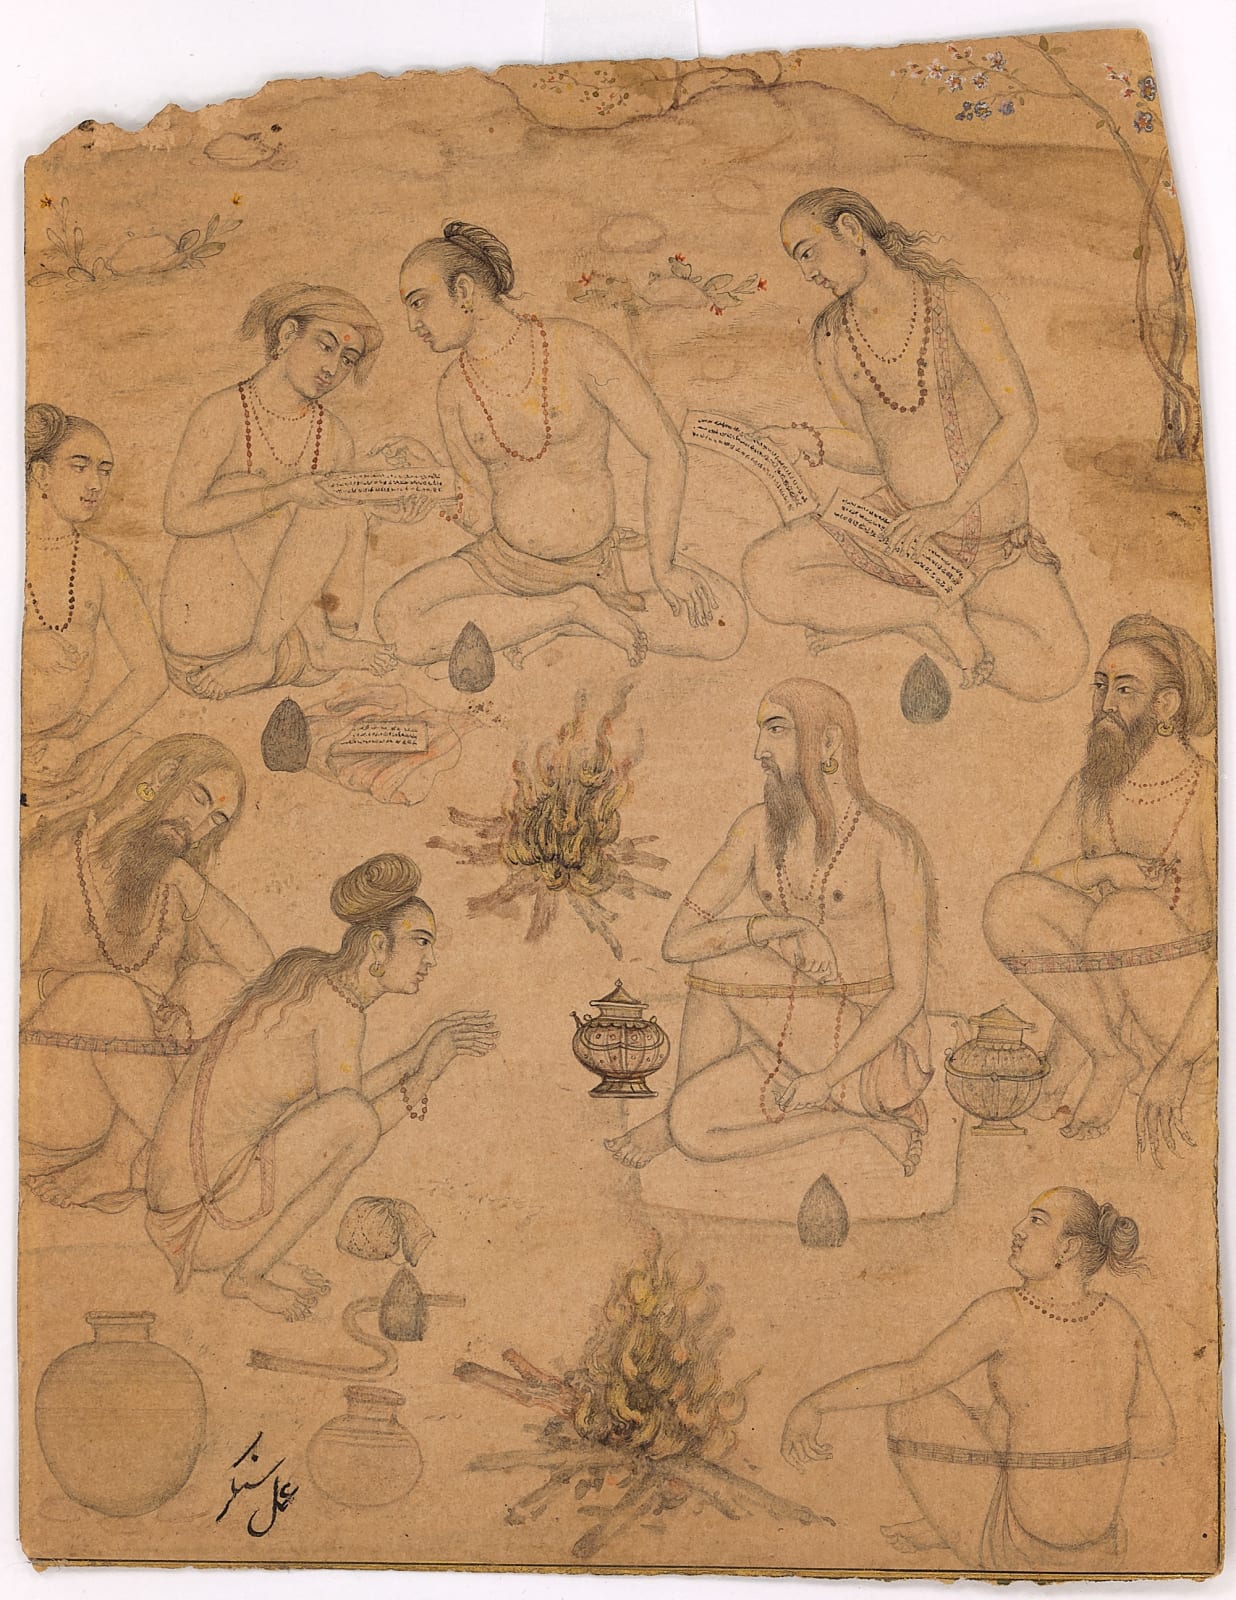 Yogis round a Fire, By the Mughal artist Sankar, c. 1600